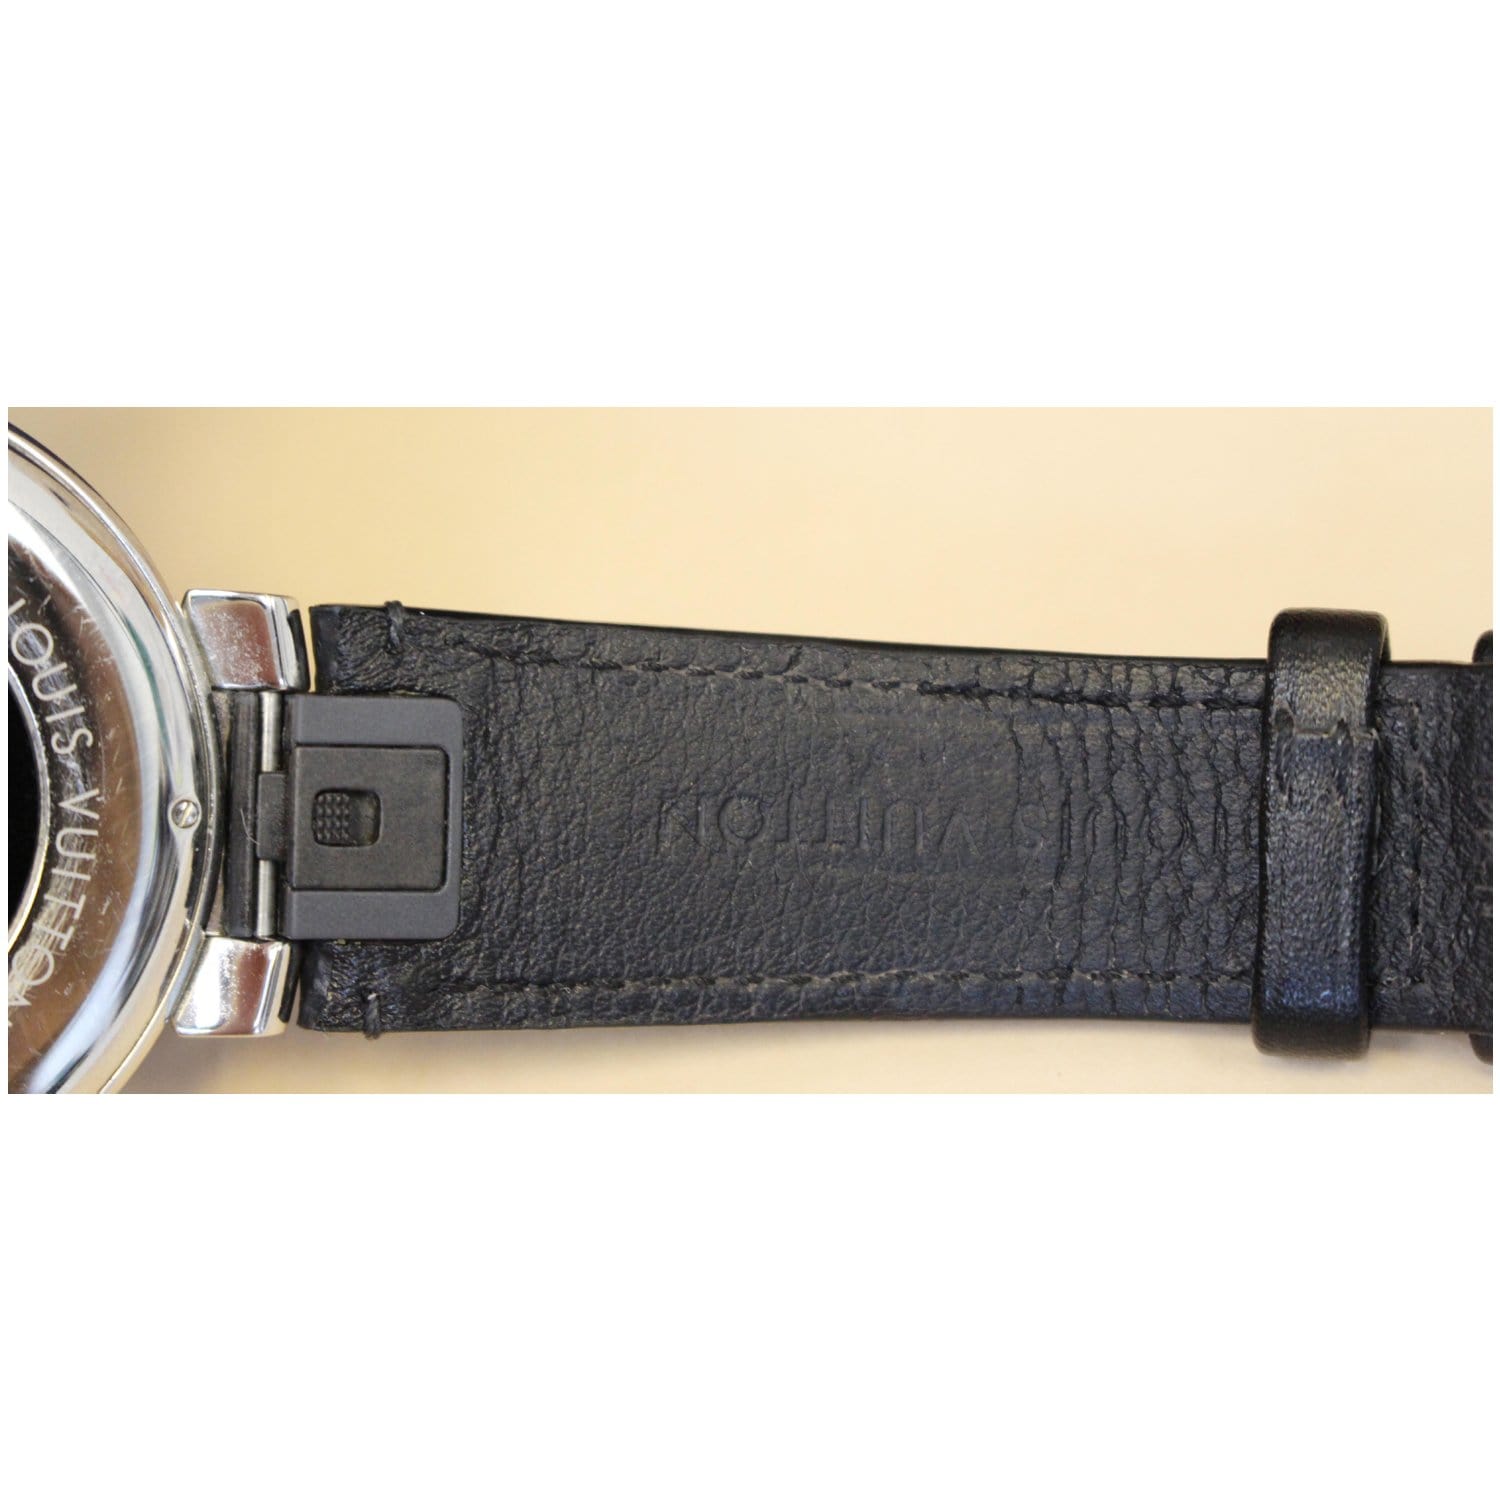 LOUIS VUITTON Tambour Horizon 42mm Monogram Eclipse Smartwatch Grey-US